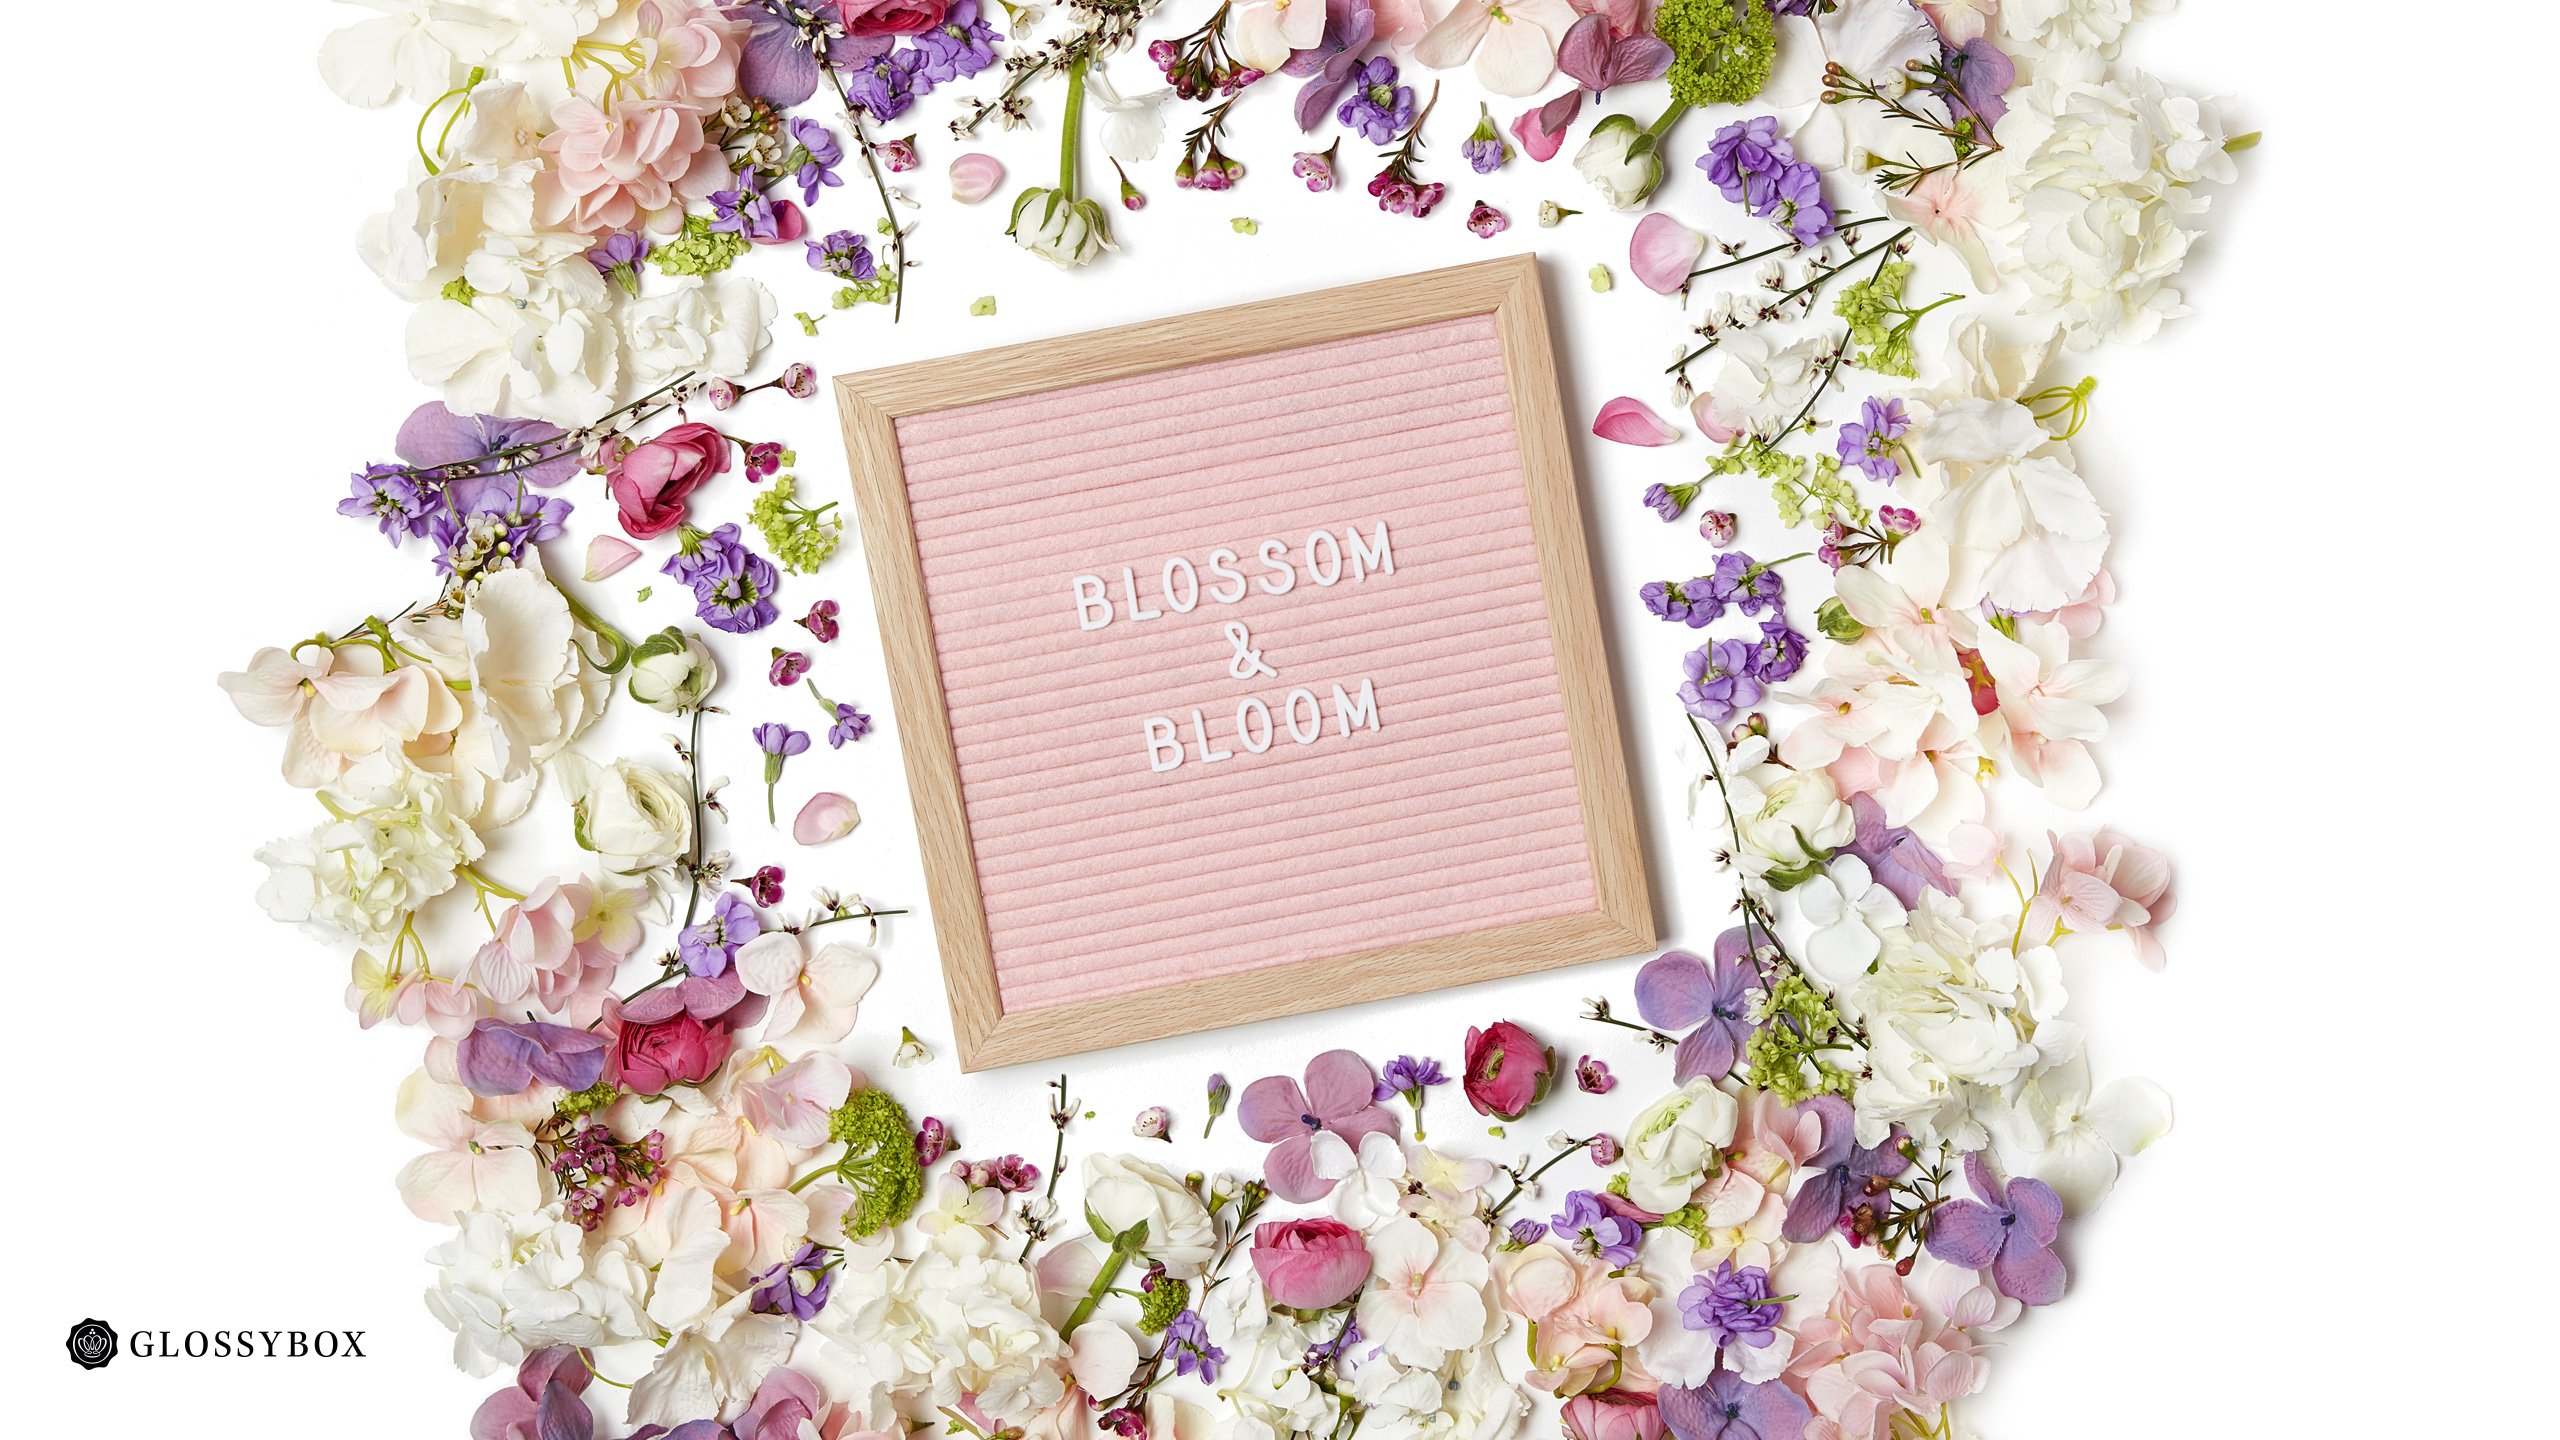 glossybox-april-blossom-wallpaper